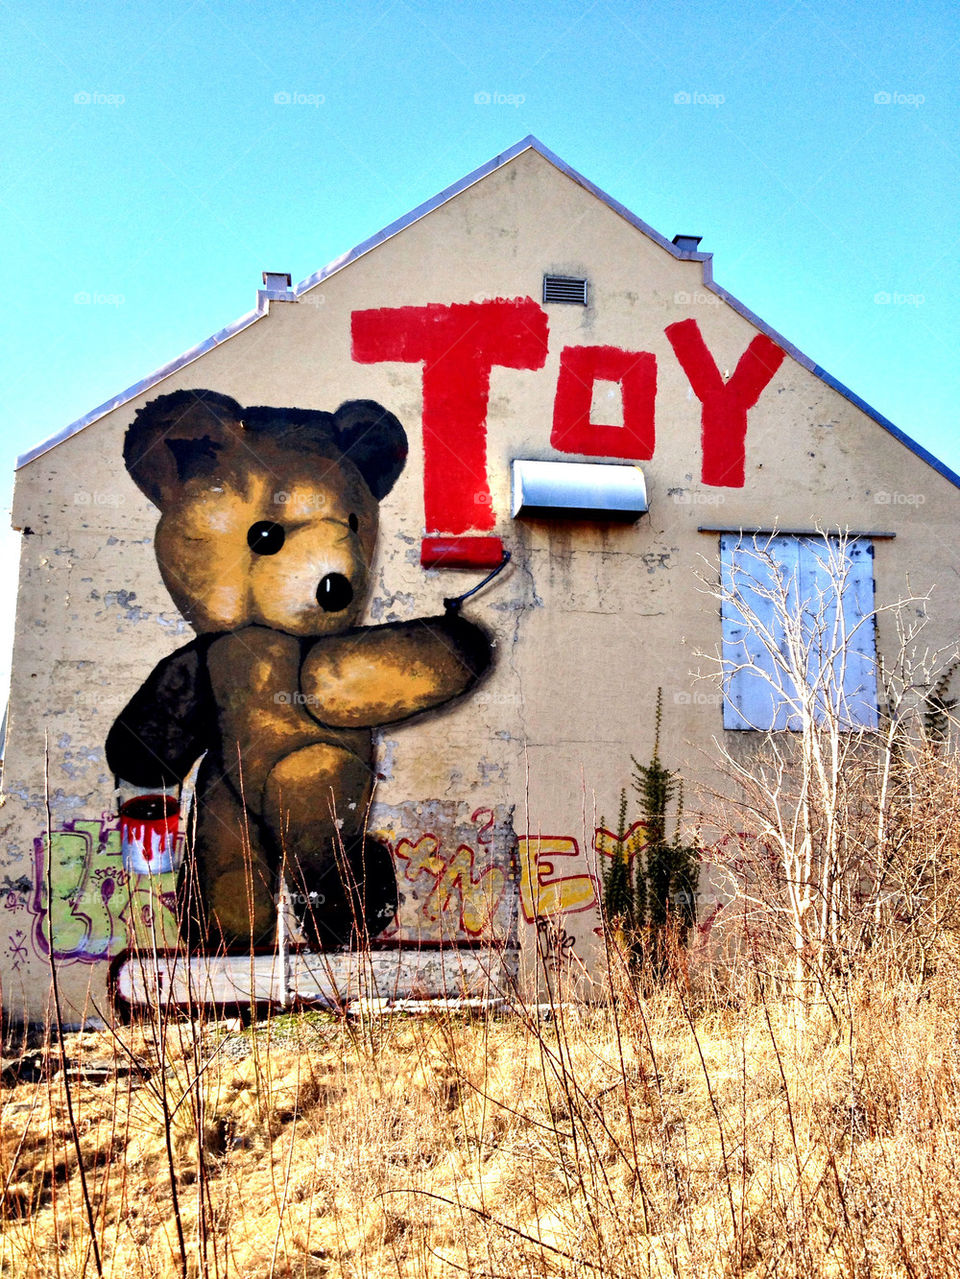 norway graffiti toy streetart by itr33